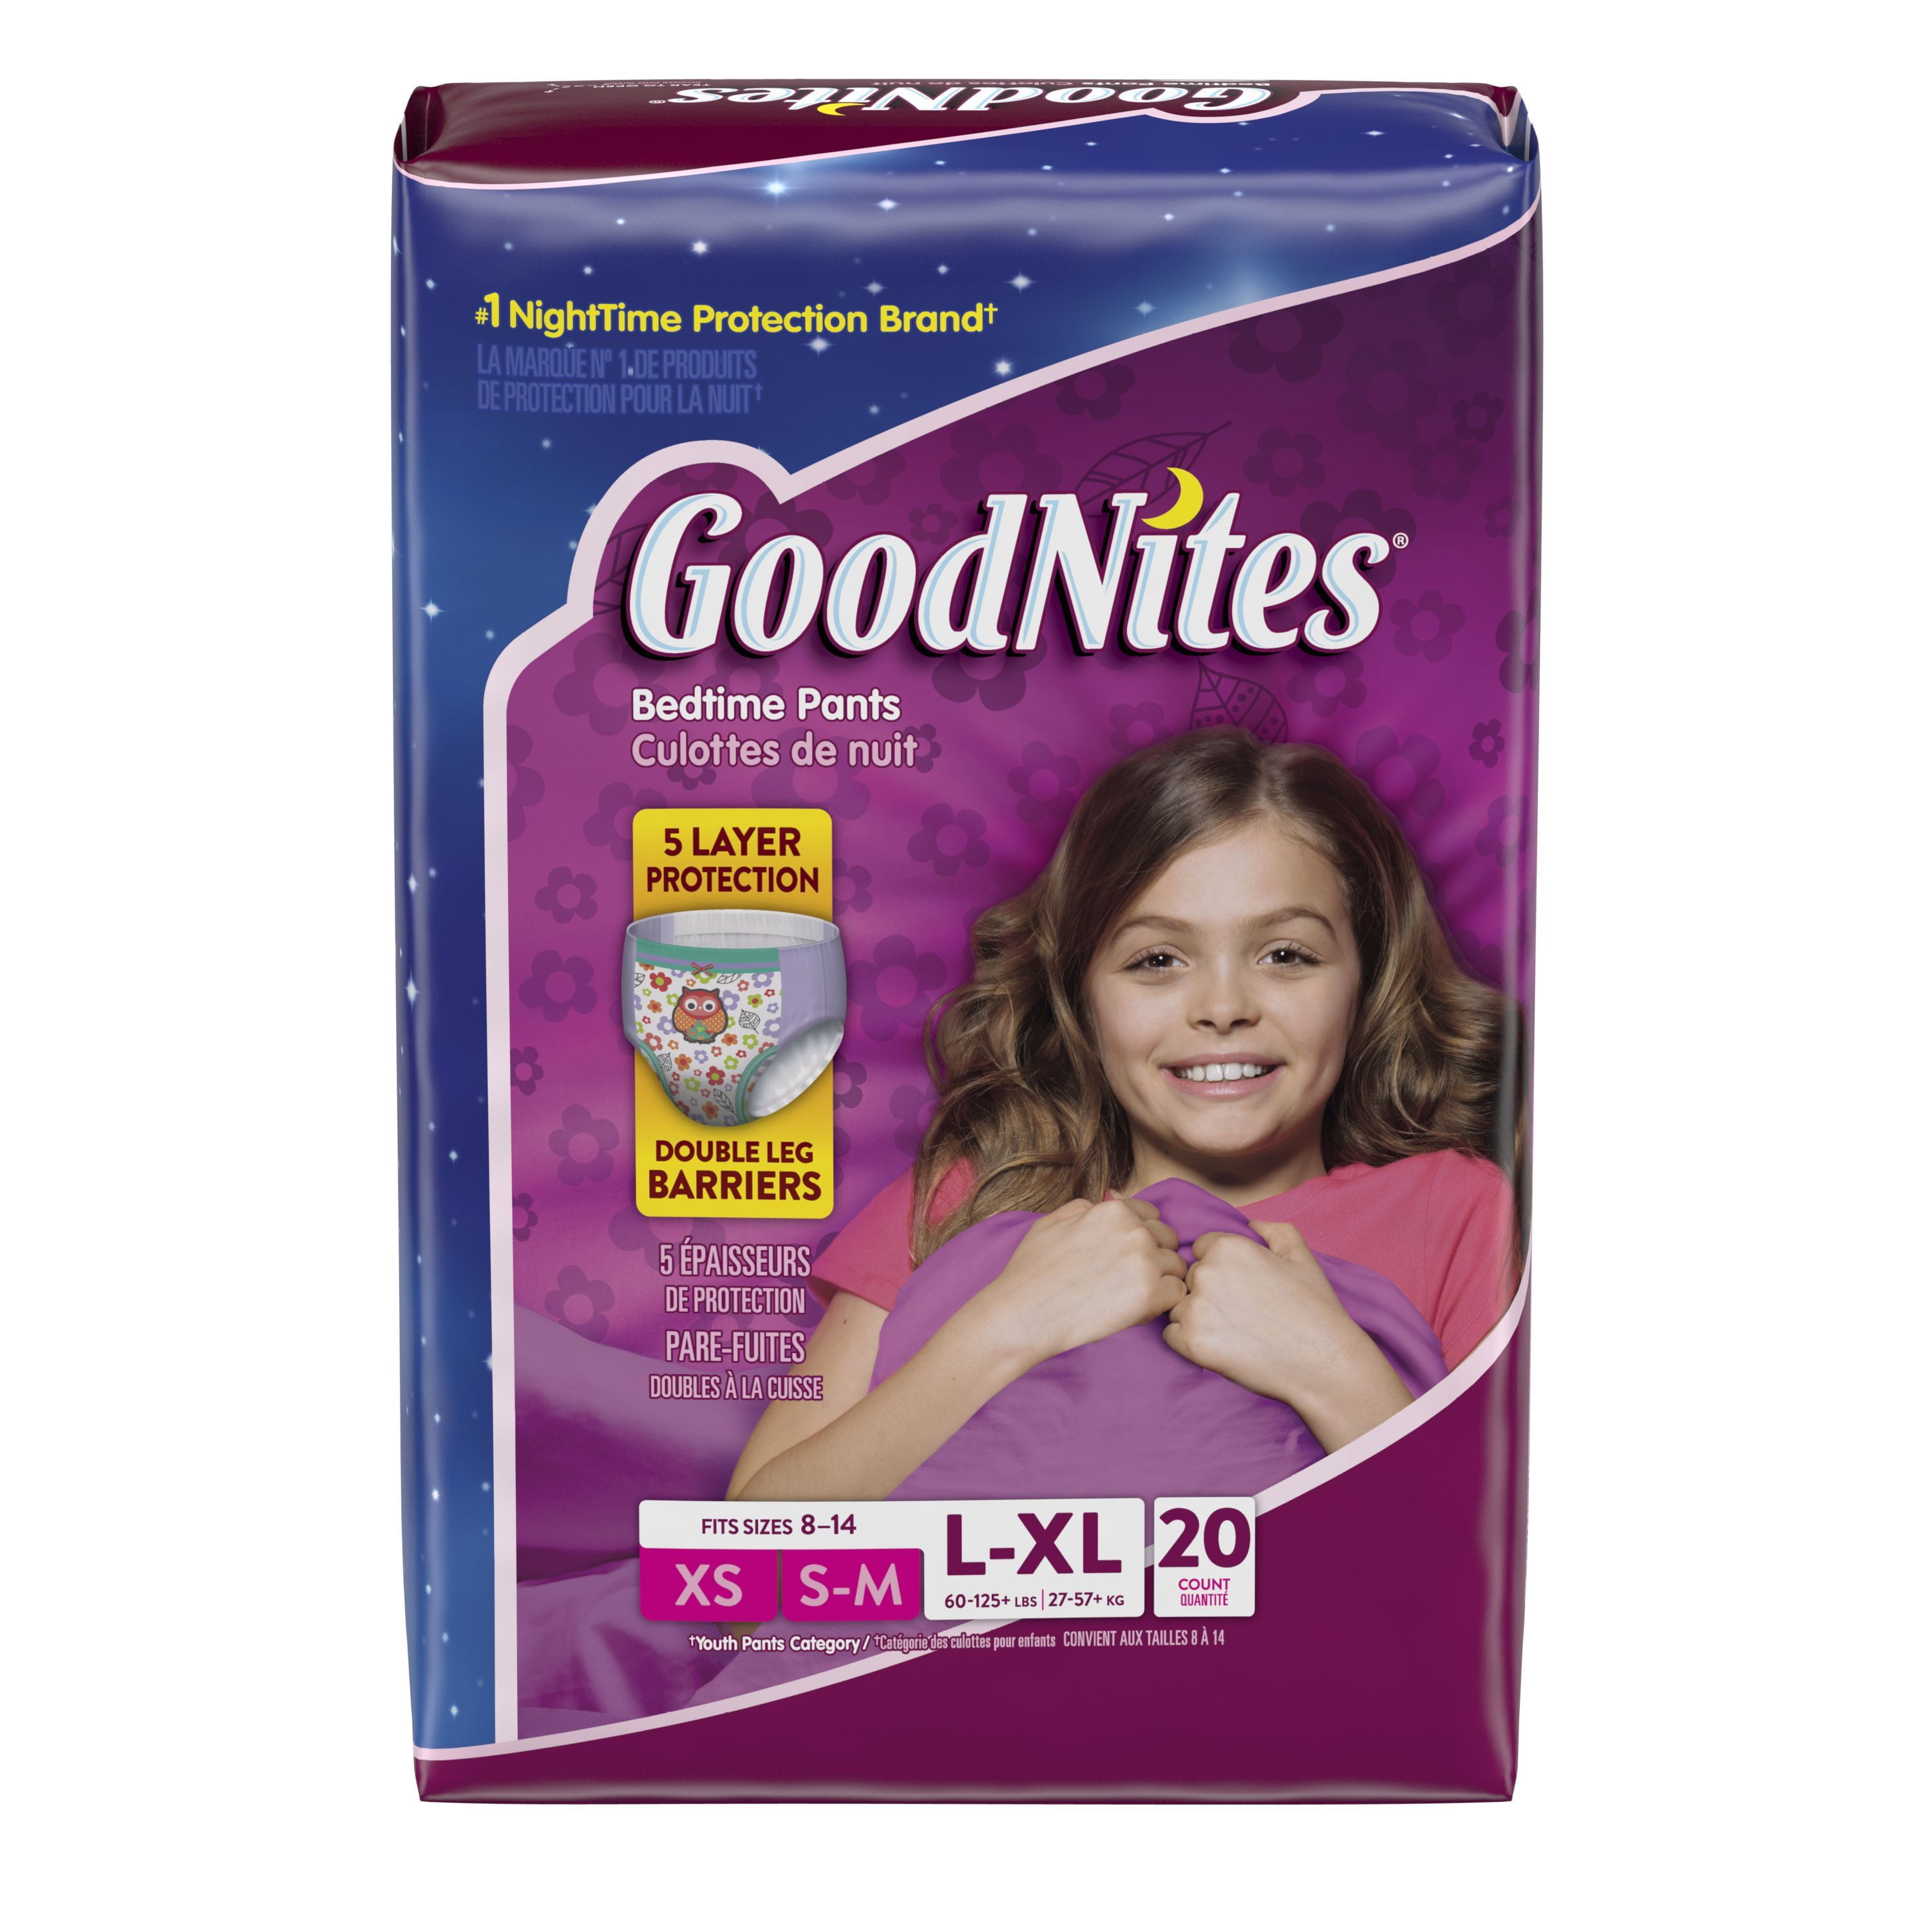 20 ct by GoodNites,Kimberly-Clark,30714-Case,Goodnites Underwear Girl 20 ct...